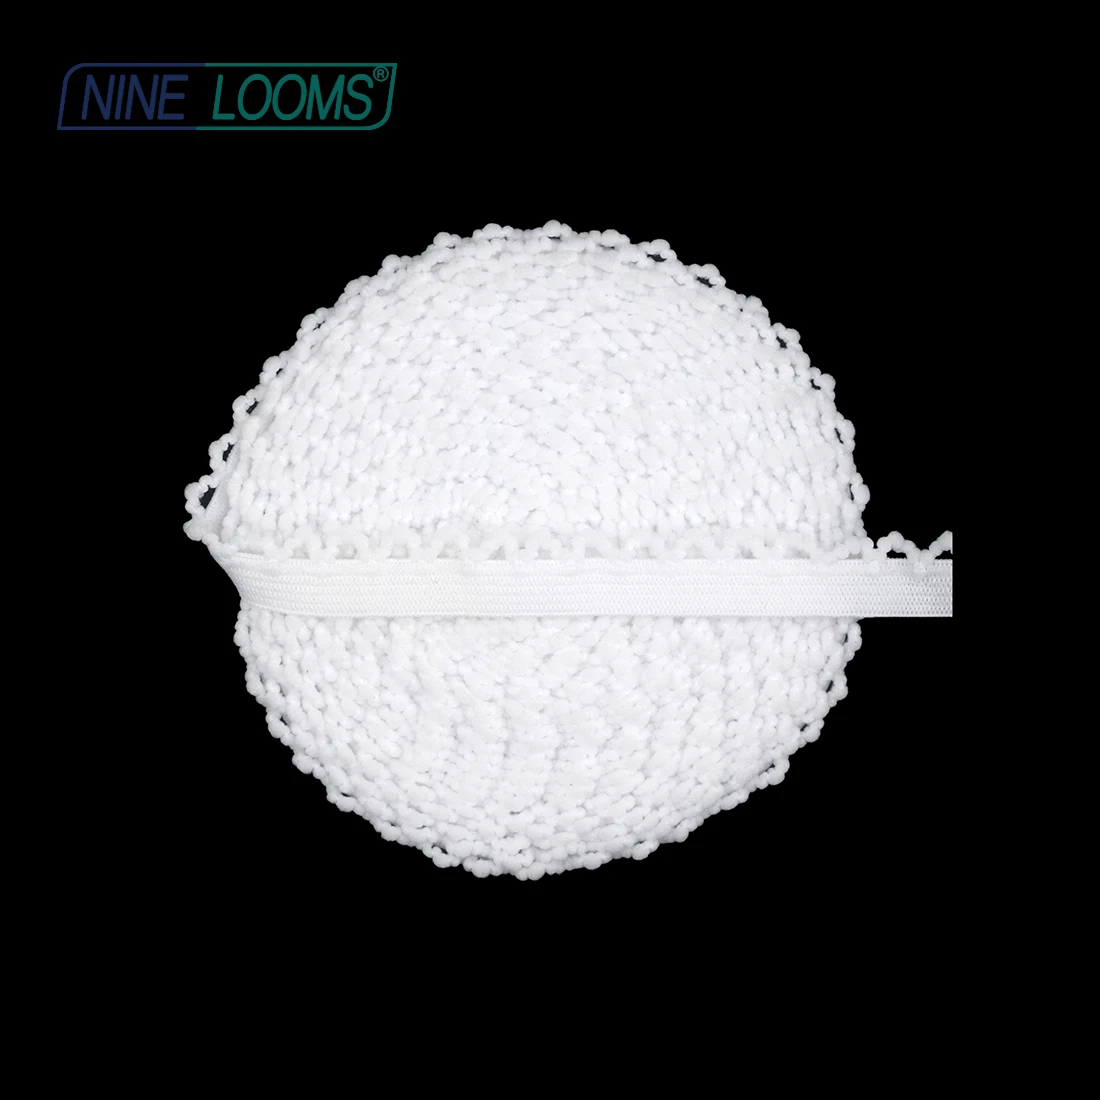 

NINE LOOMS Picot Loop Lace Trim Elastics 3/8" 10mm Decorative Frilly Spandex Webbing Underwear Lingerie Sewing Craft 2 5 10 Yard